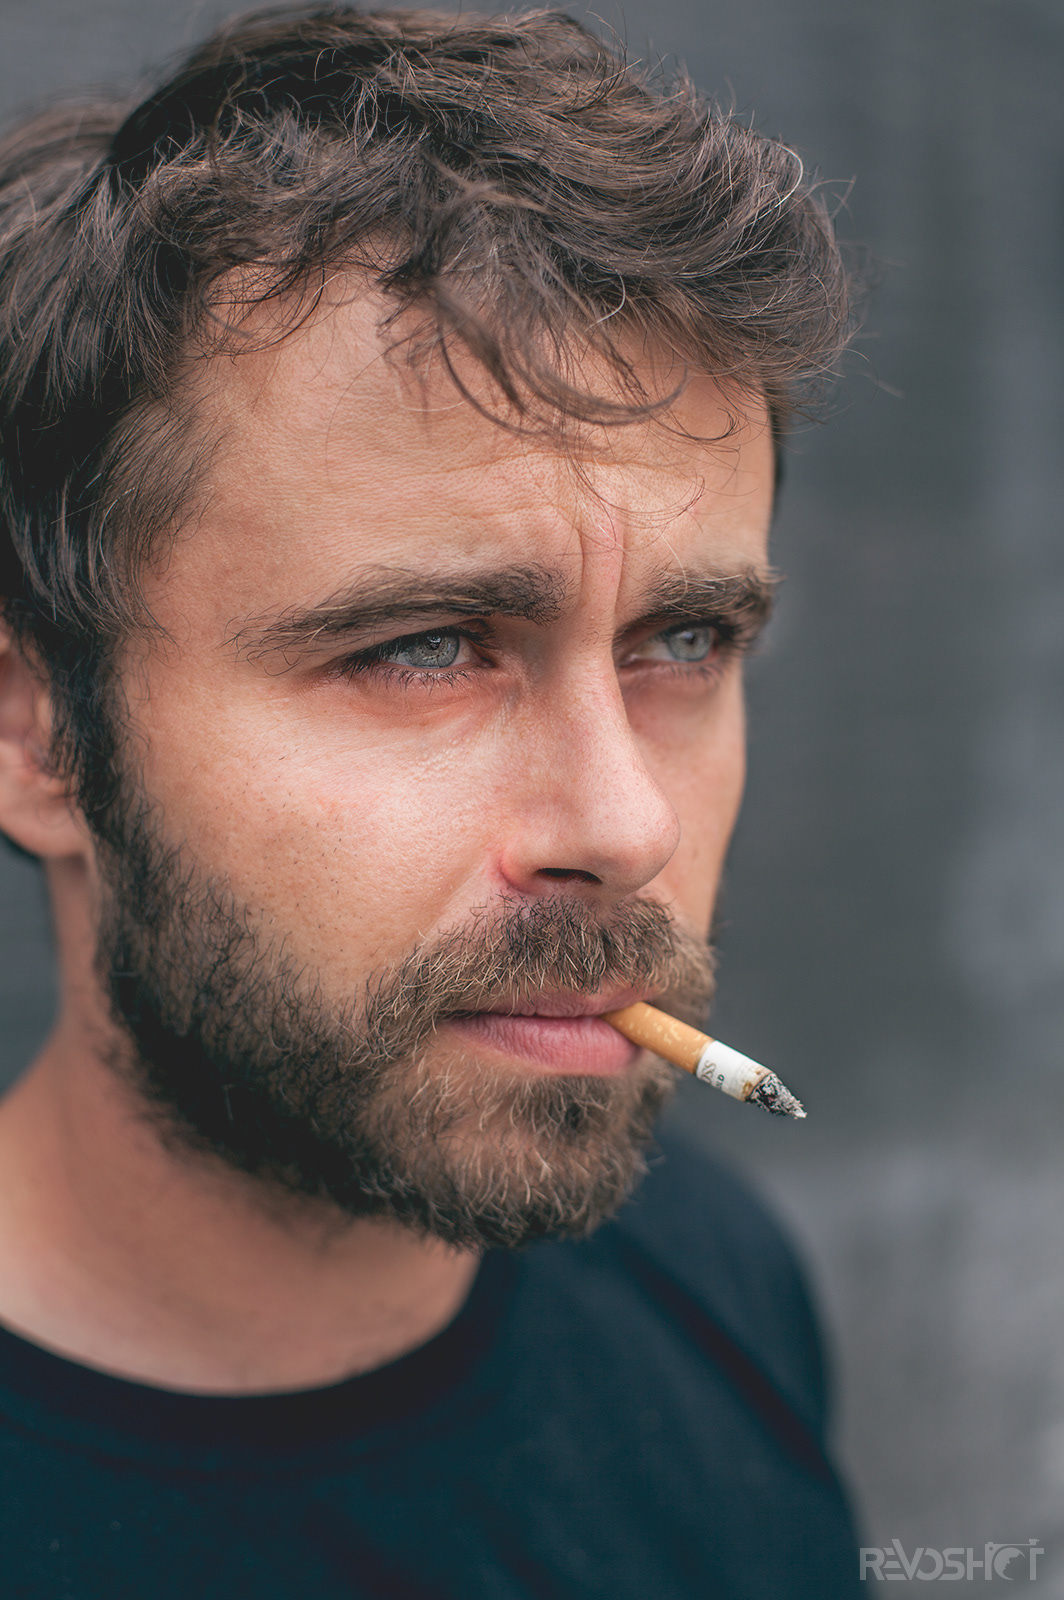 Natural Light portrait portrait photography smoke cigarette beard